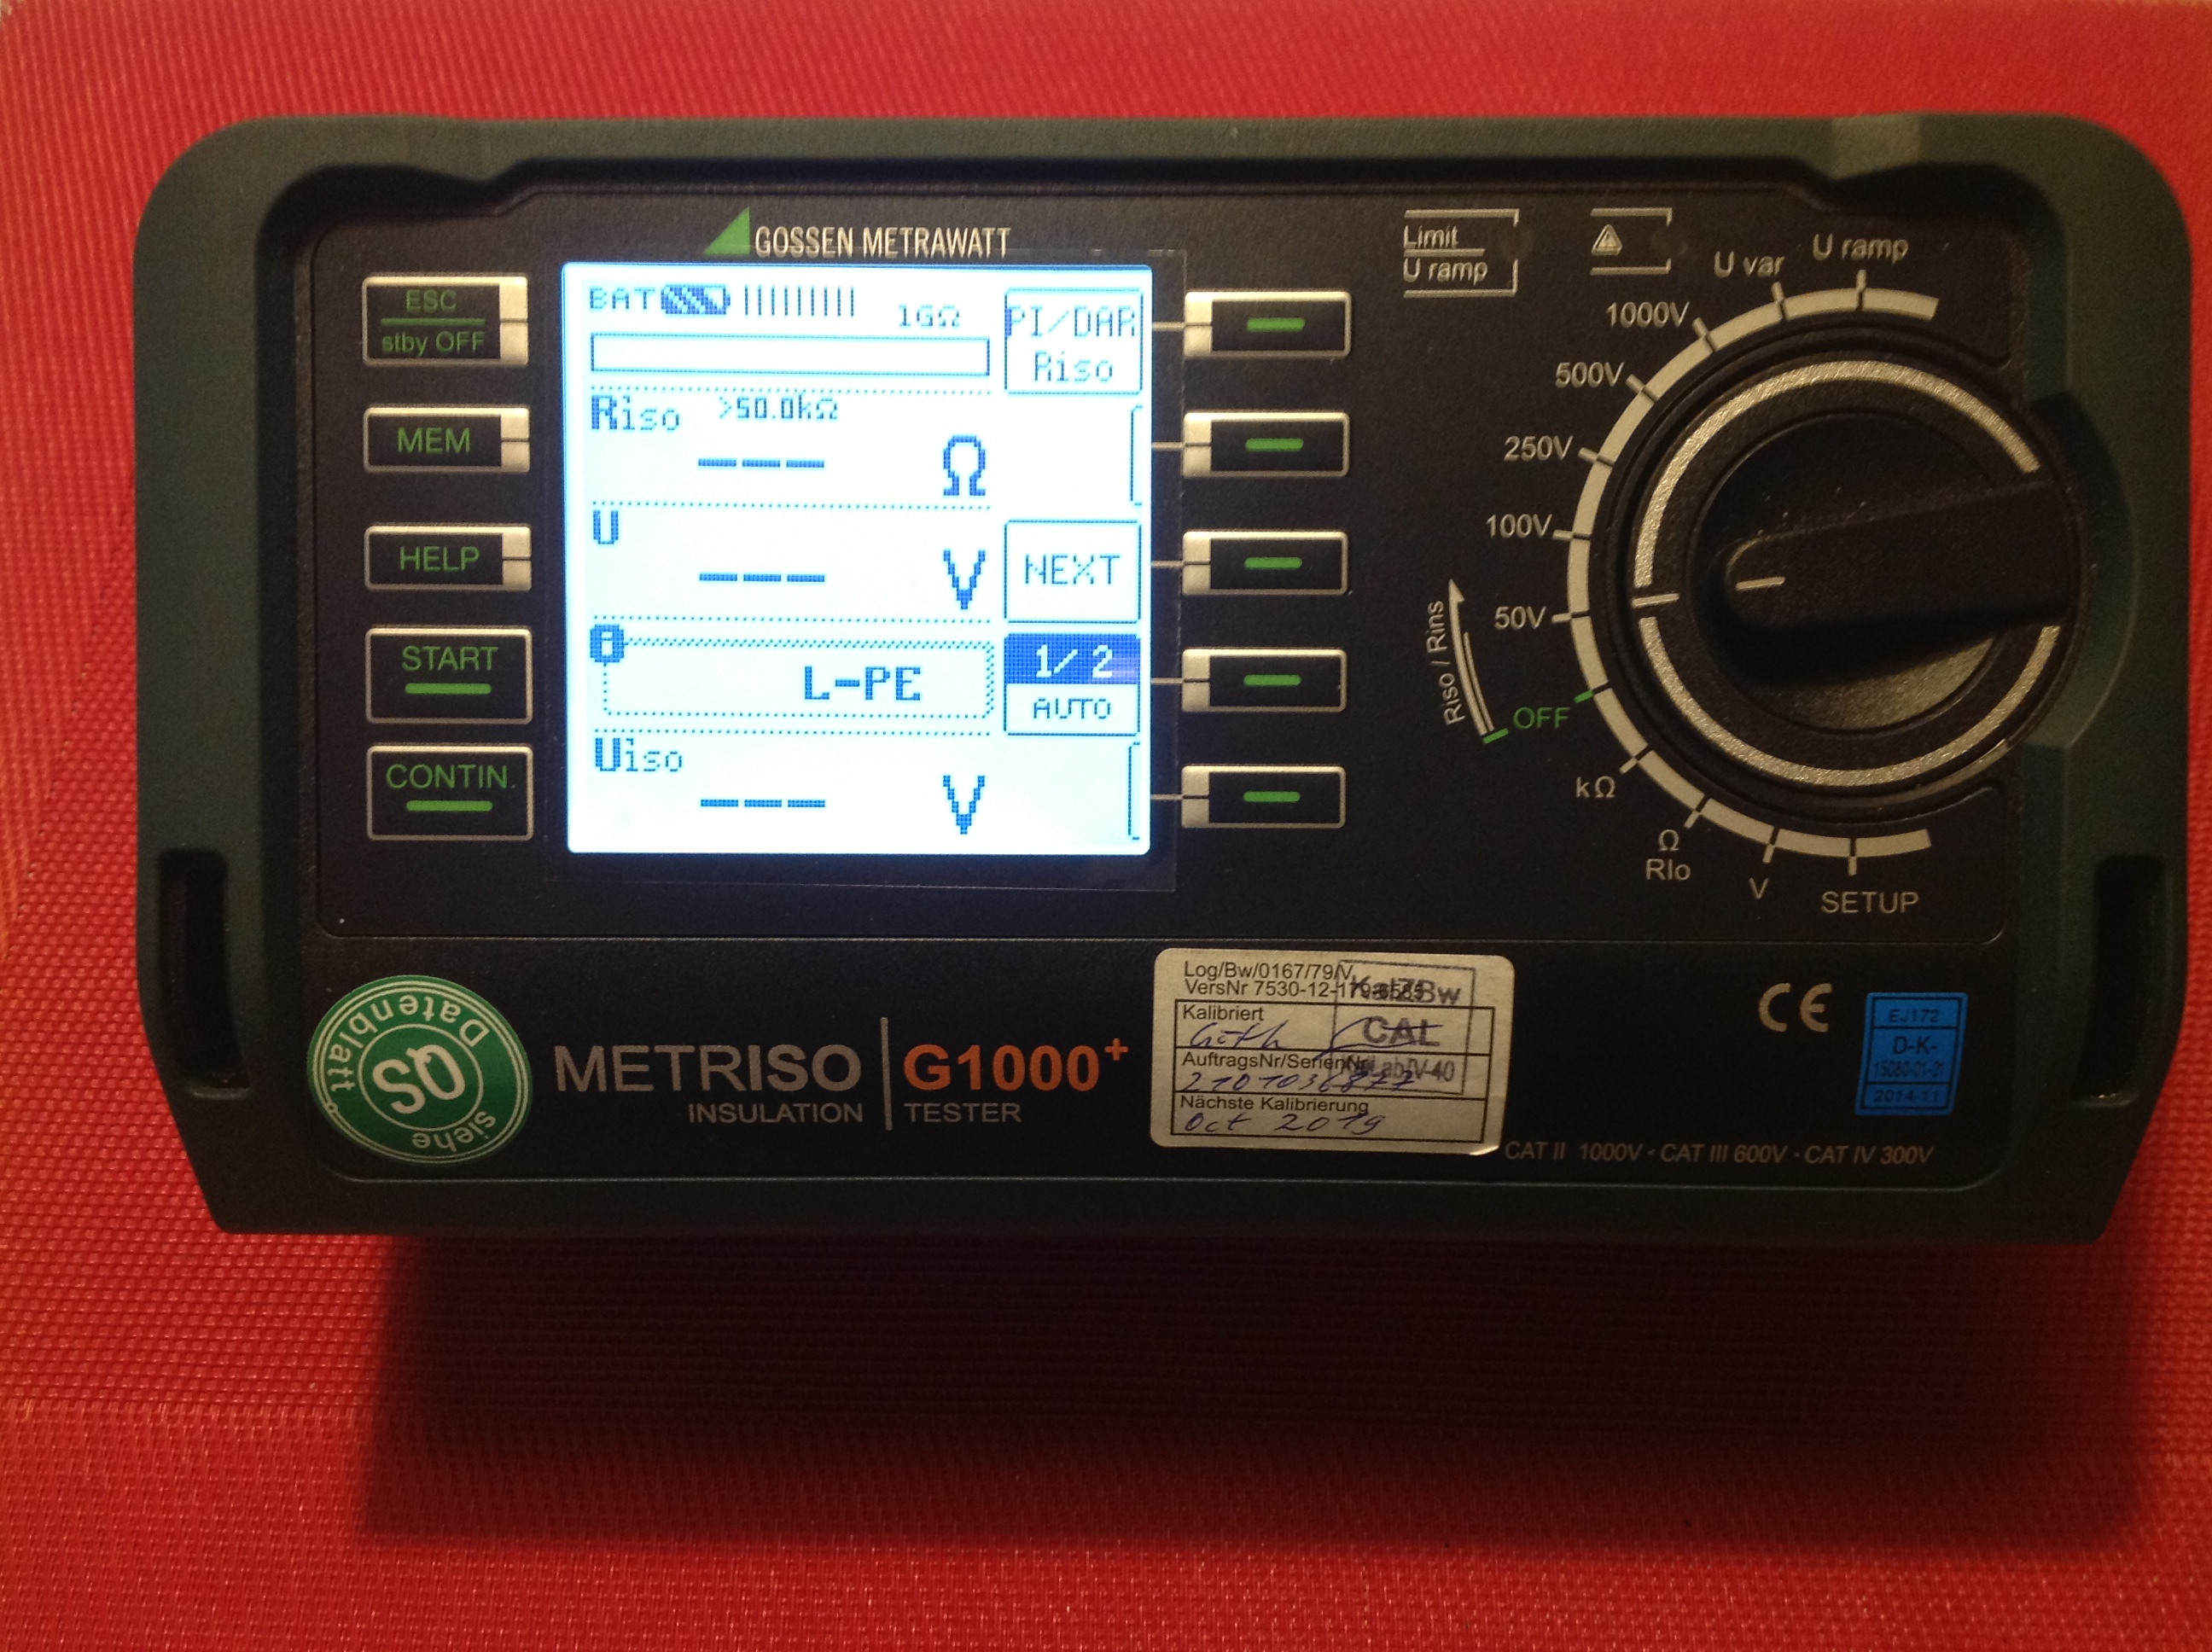 Gossen Metrawatt Metriso G1000 Isolationstester